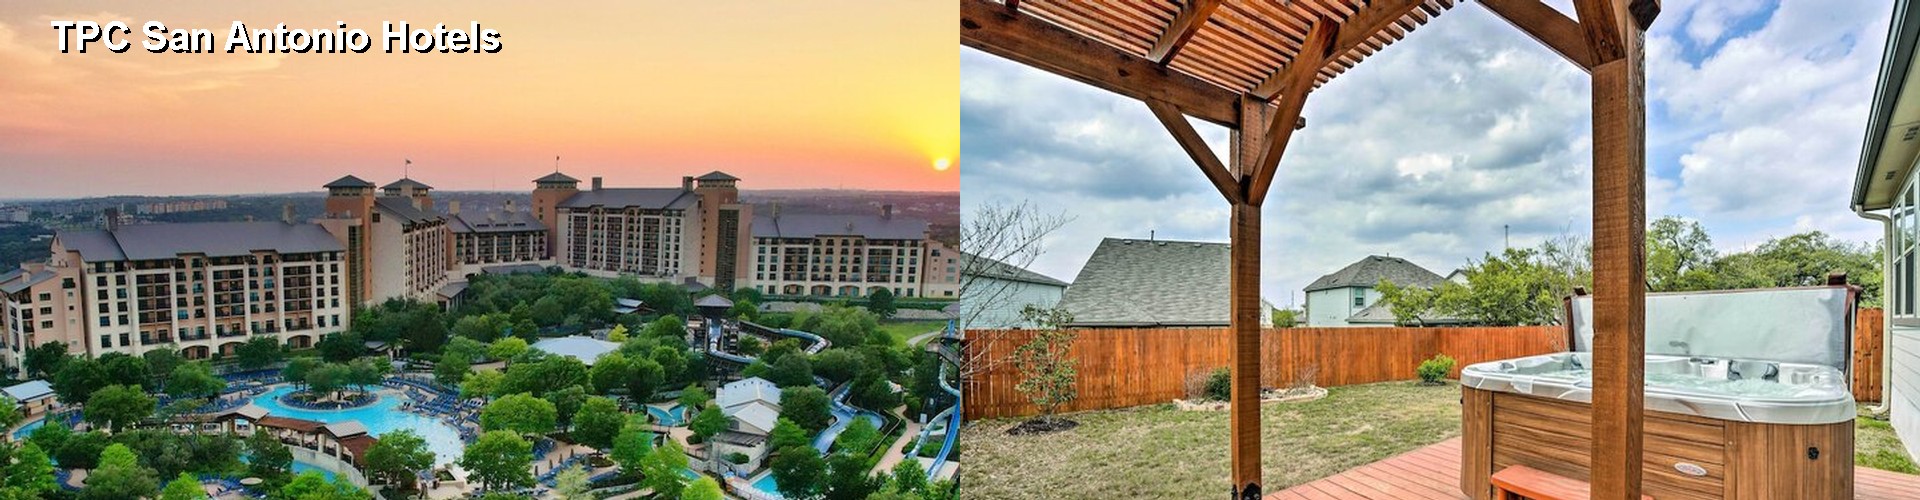 5 Best Hotels near TPC San Antonio